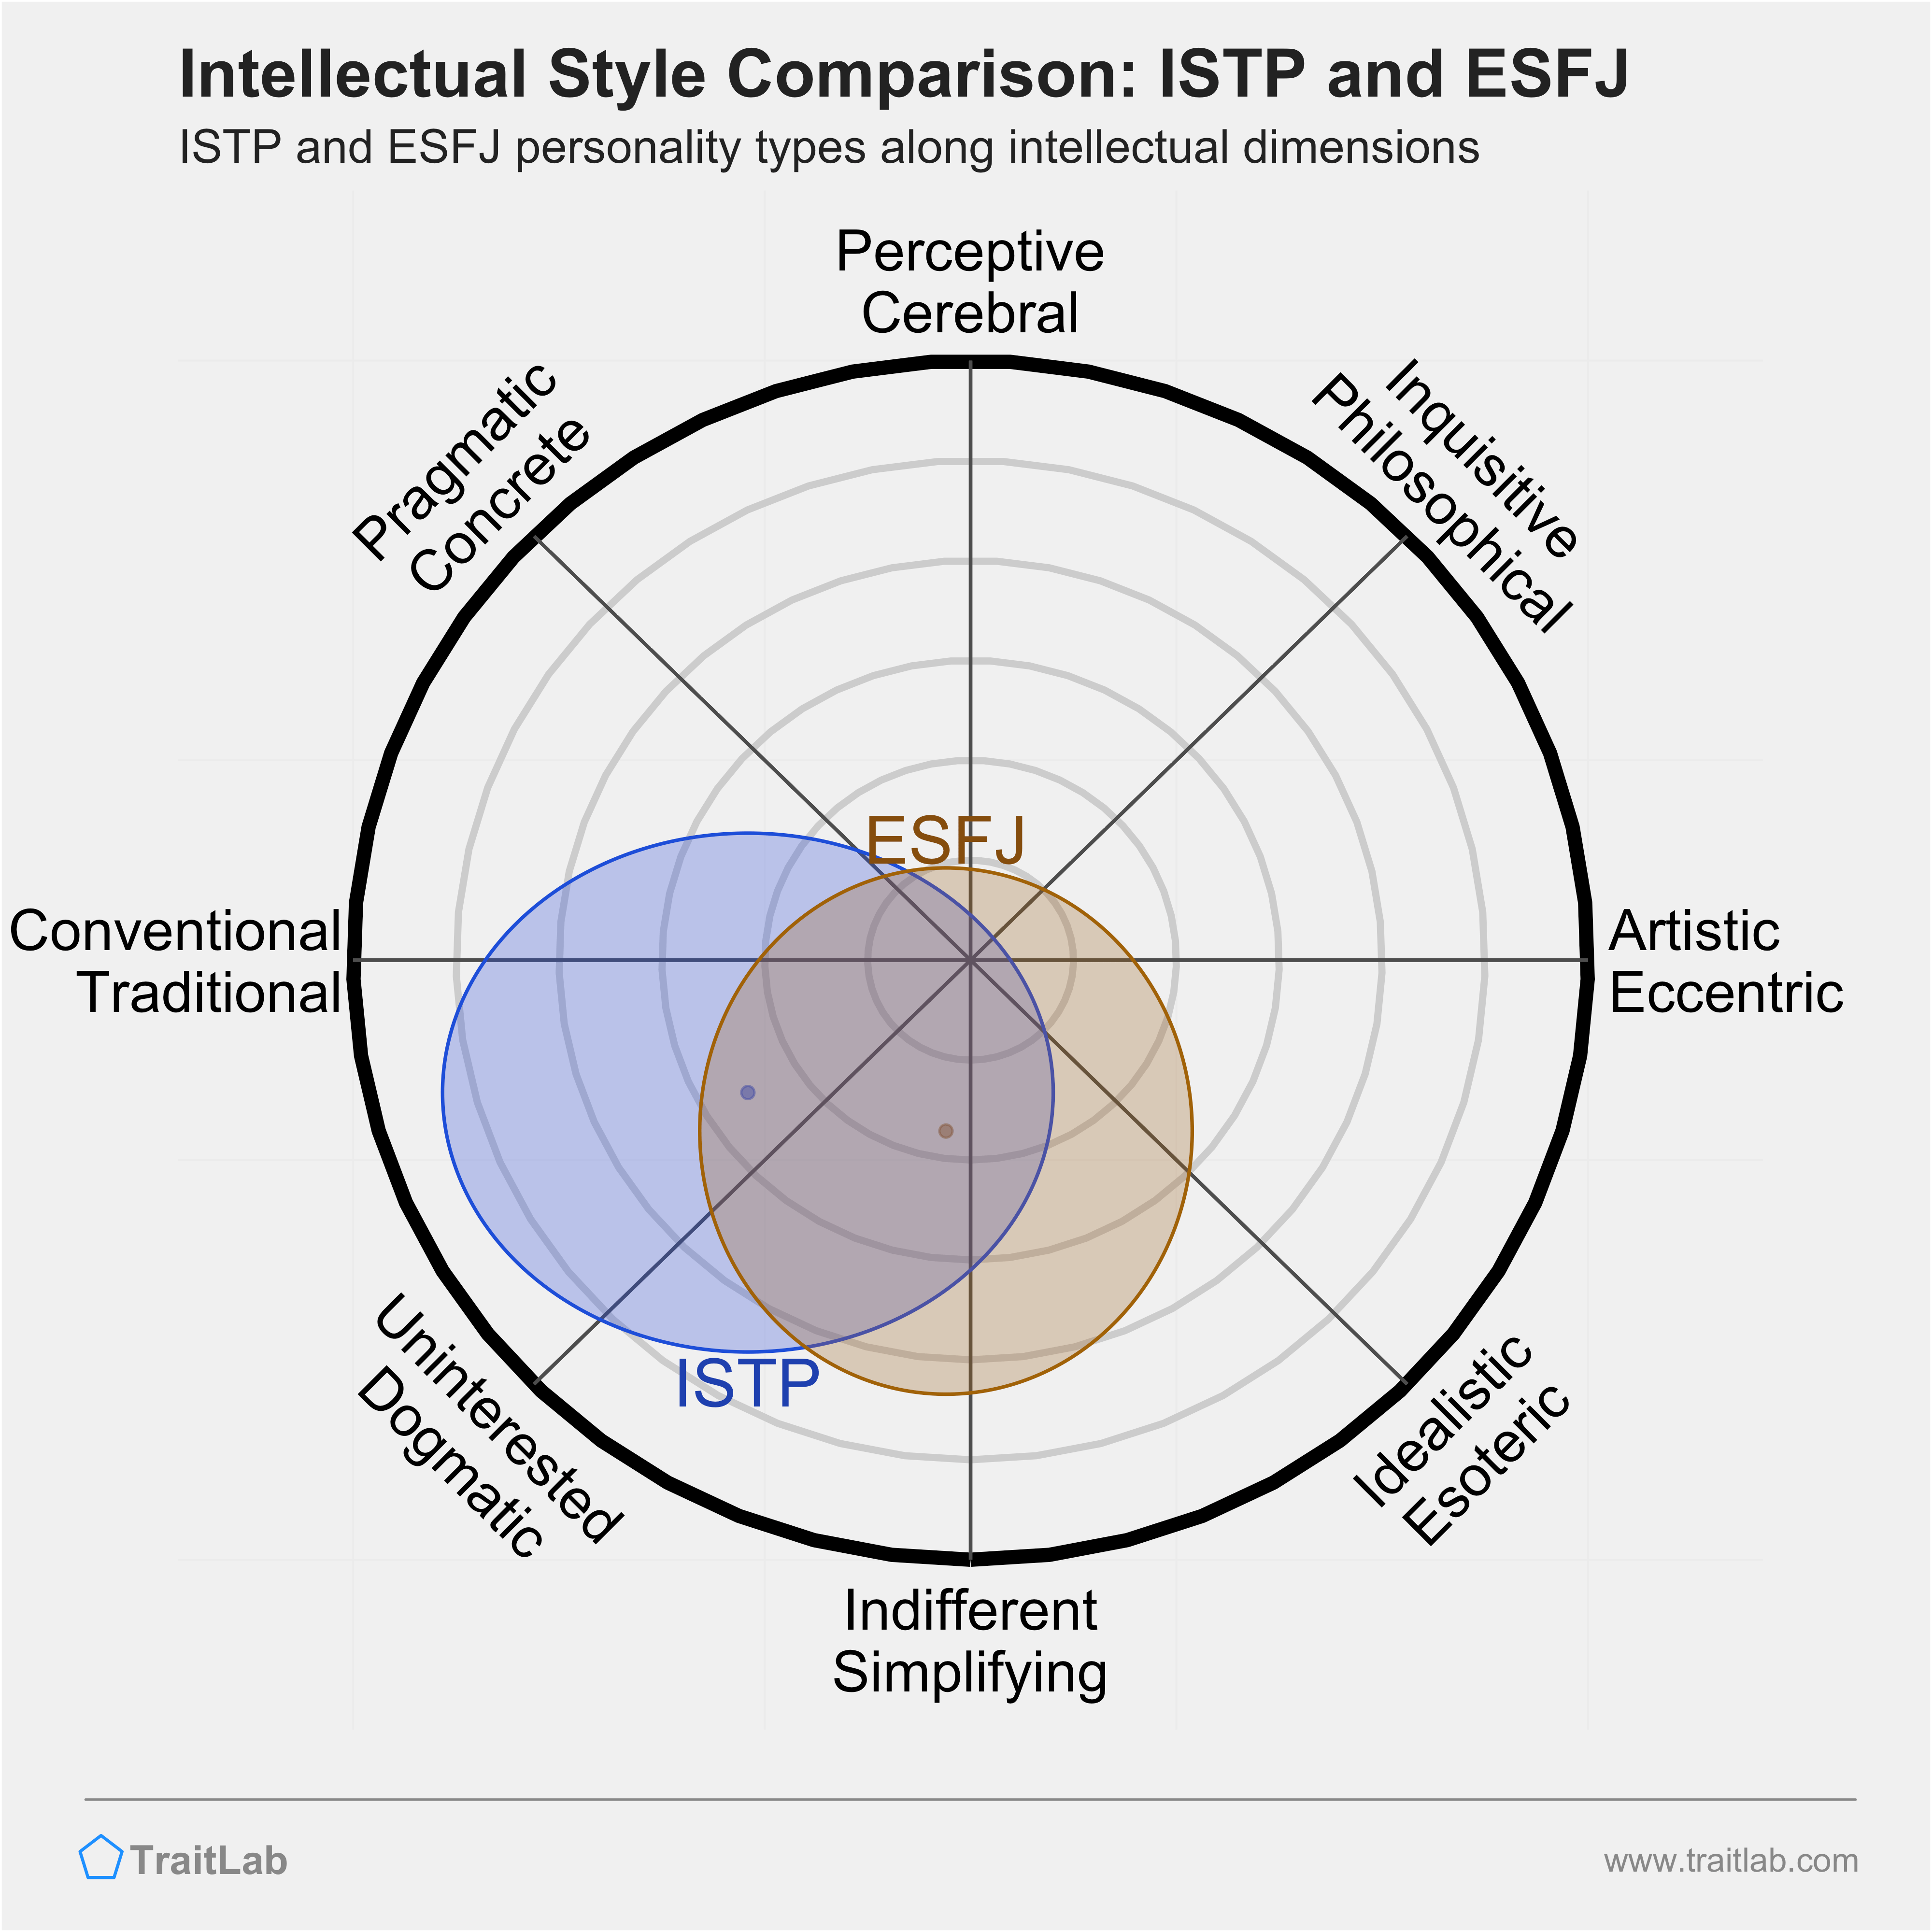 ISTP and ESFJ comparison across intellectual dimensions